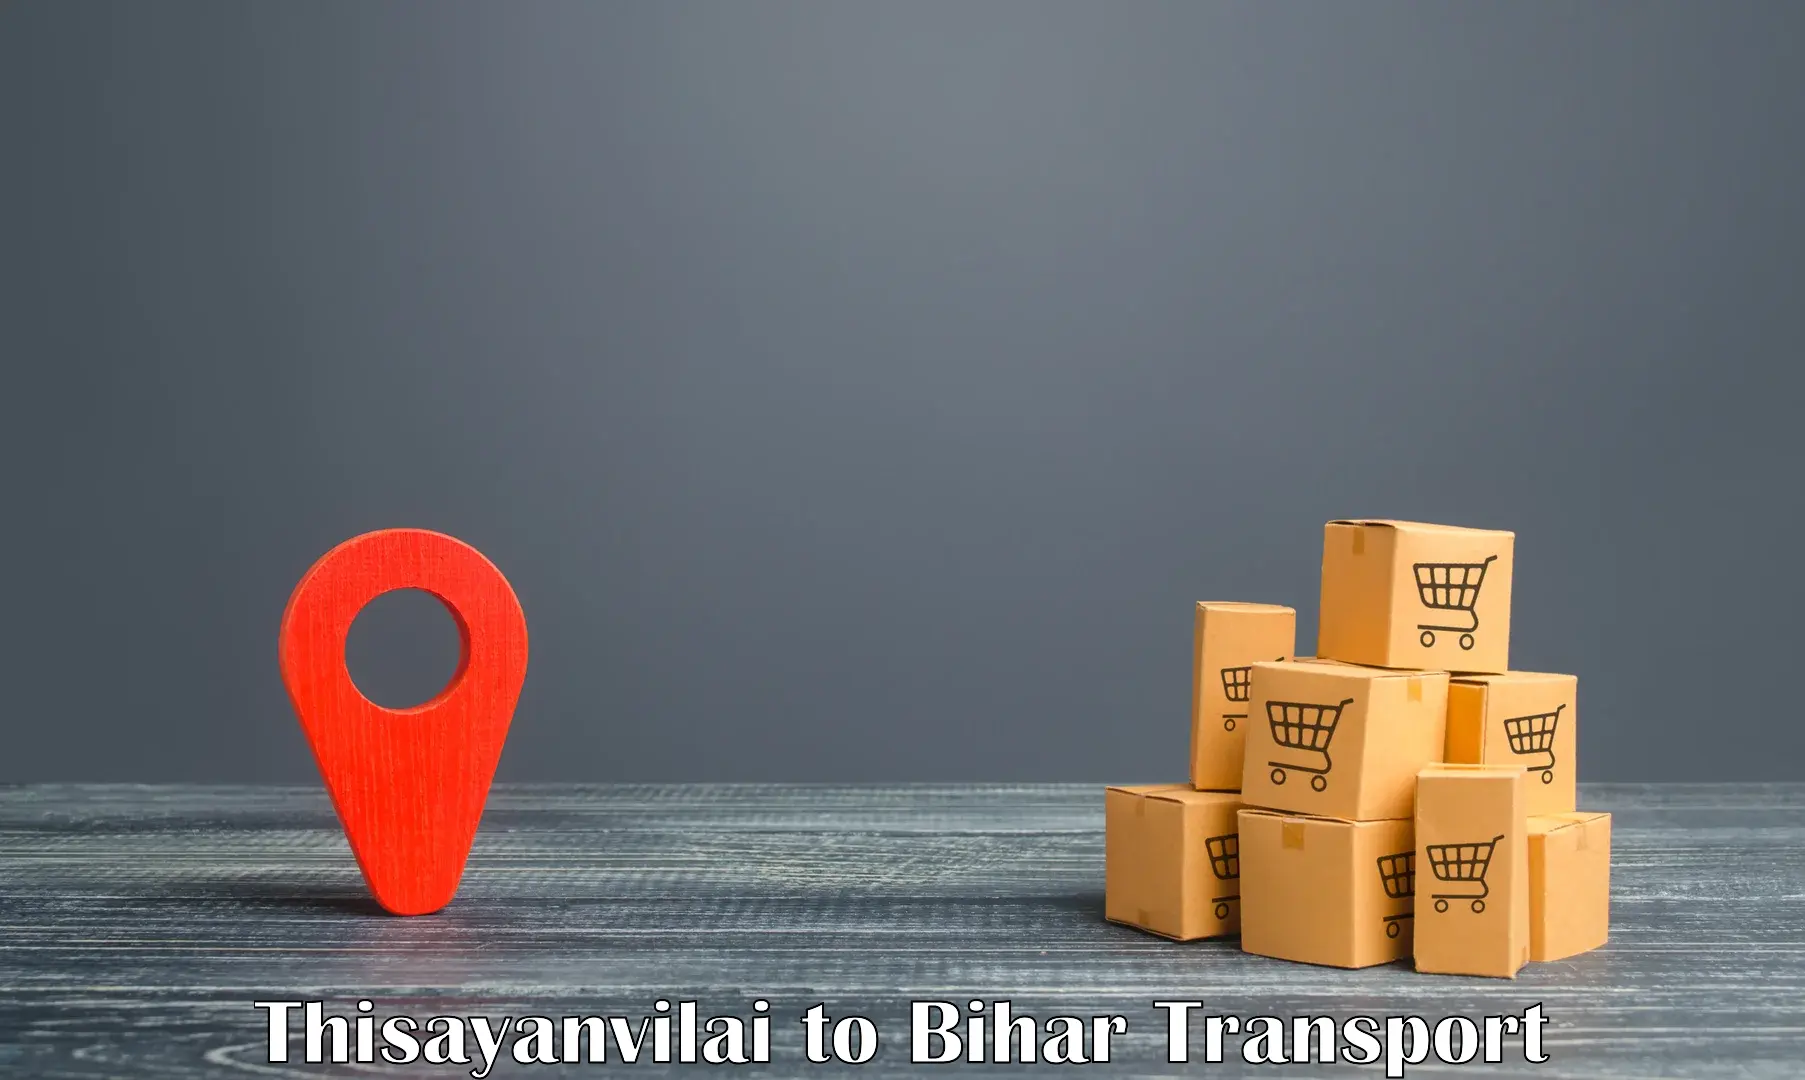 Nearest transport service Thisayanvilai to Bettiah